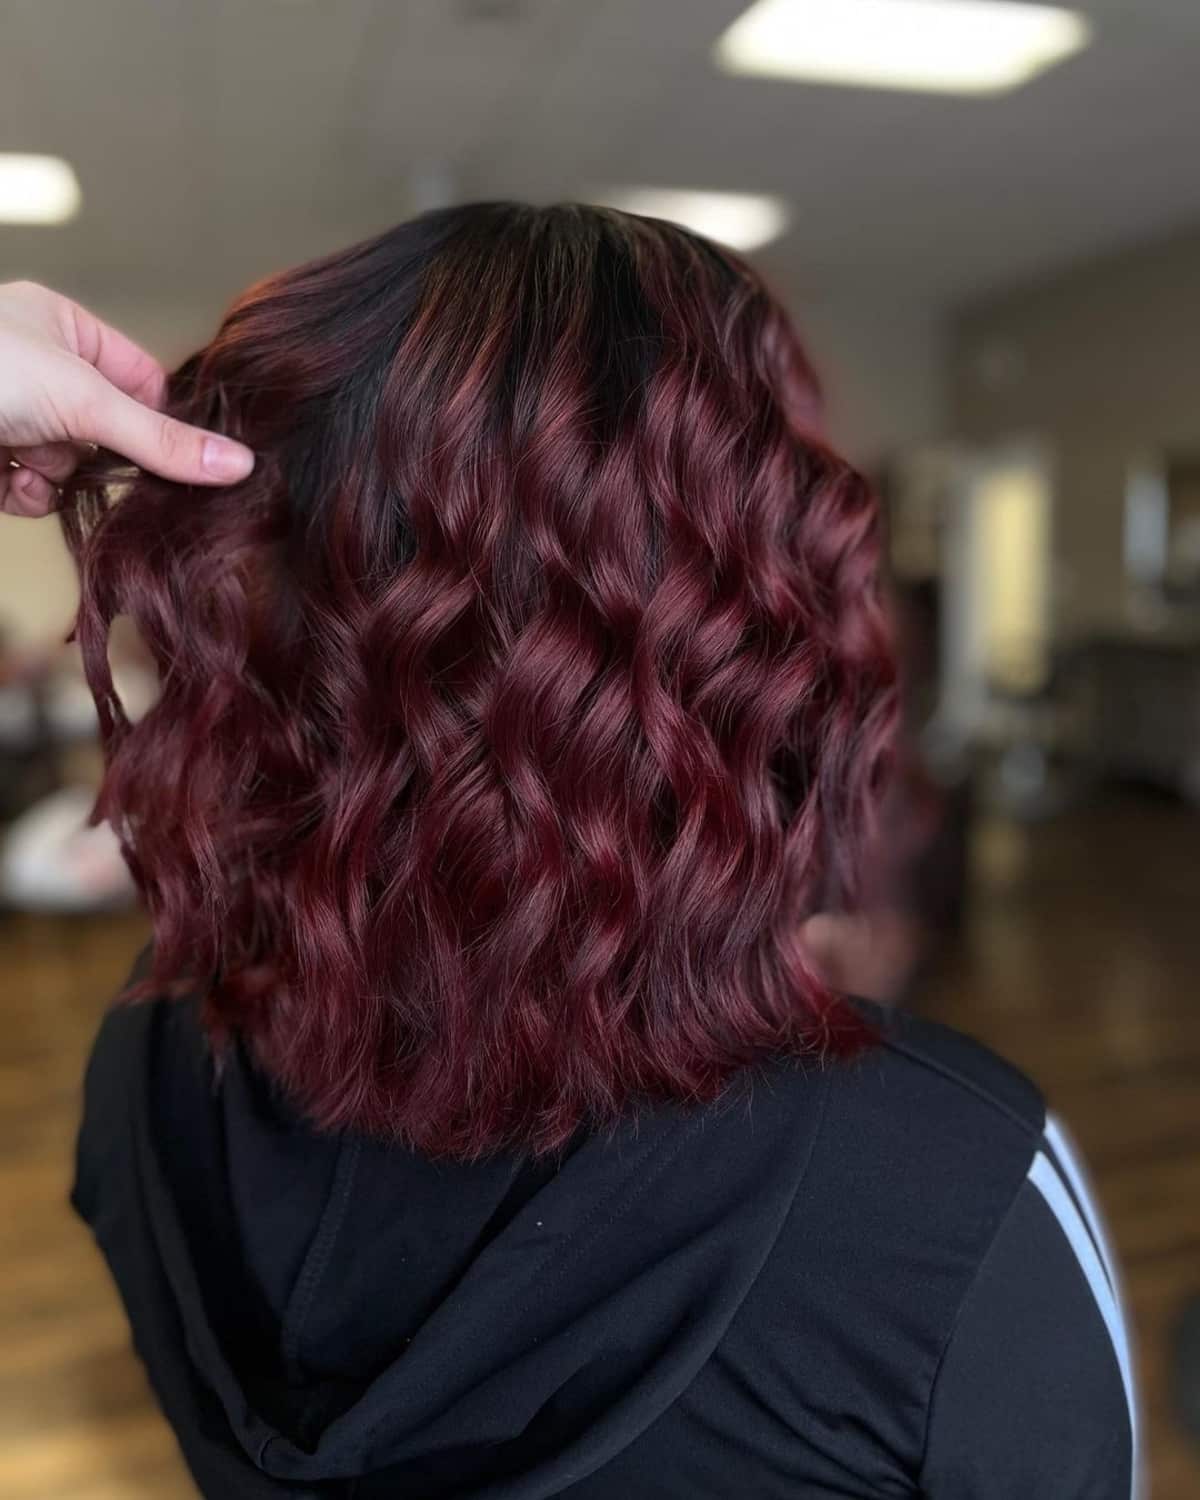 Maroon hair with burgundy highlights